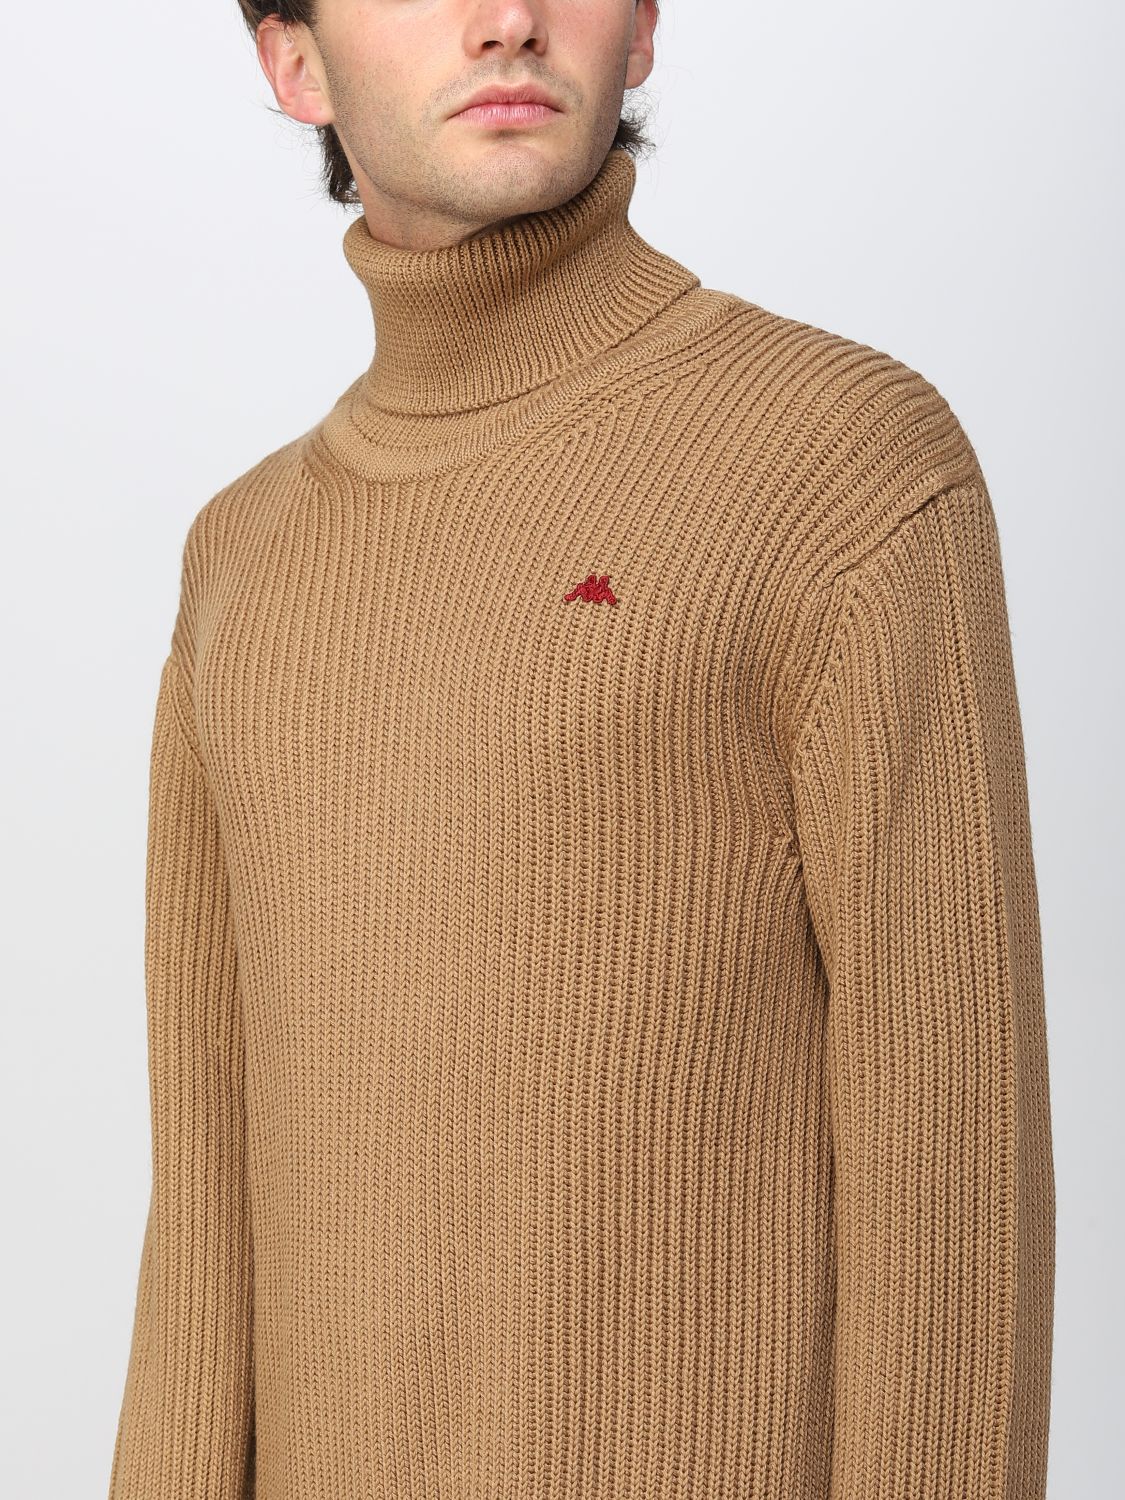 ROBE DI sweater for man - Camel | Di Kappa sweater 67115KW online on